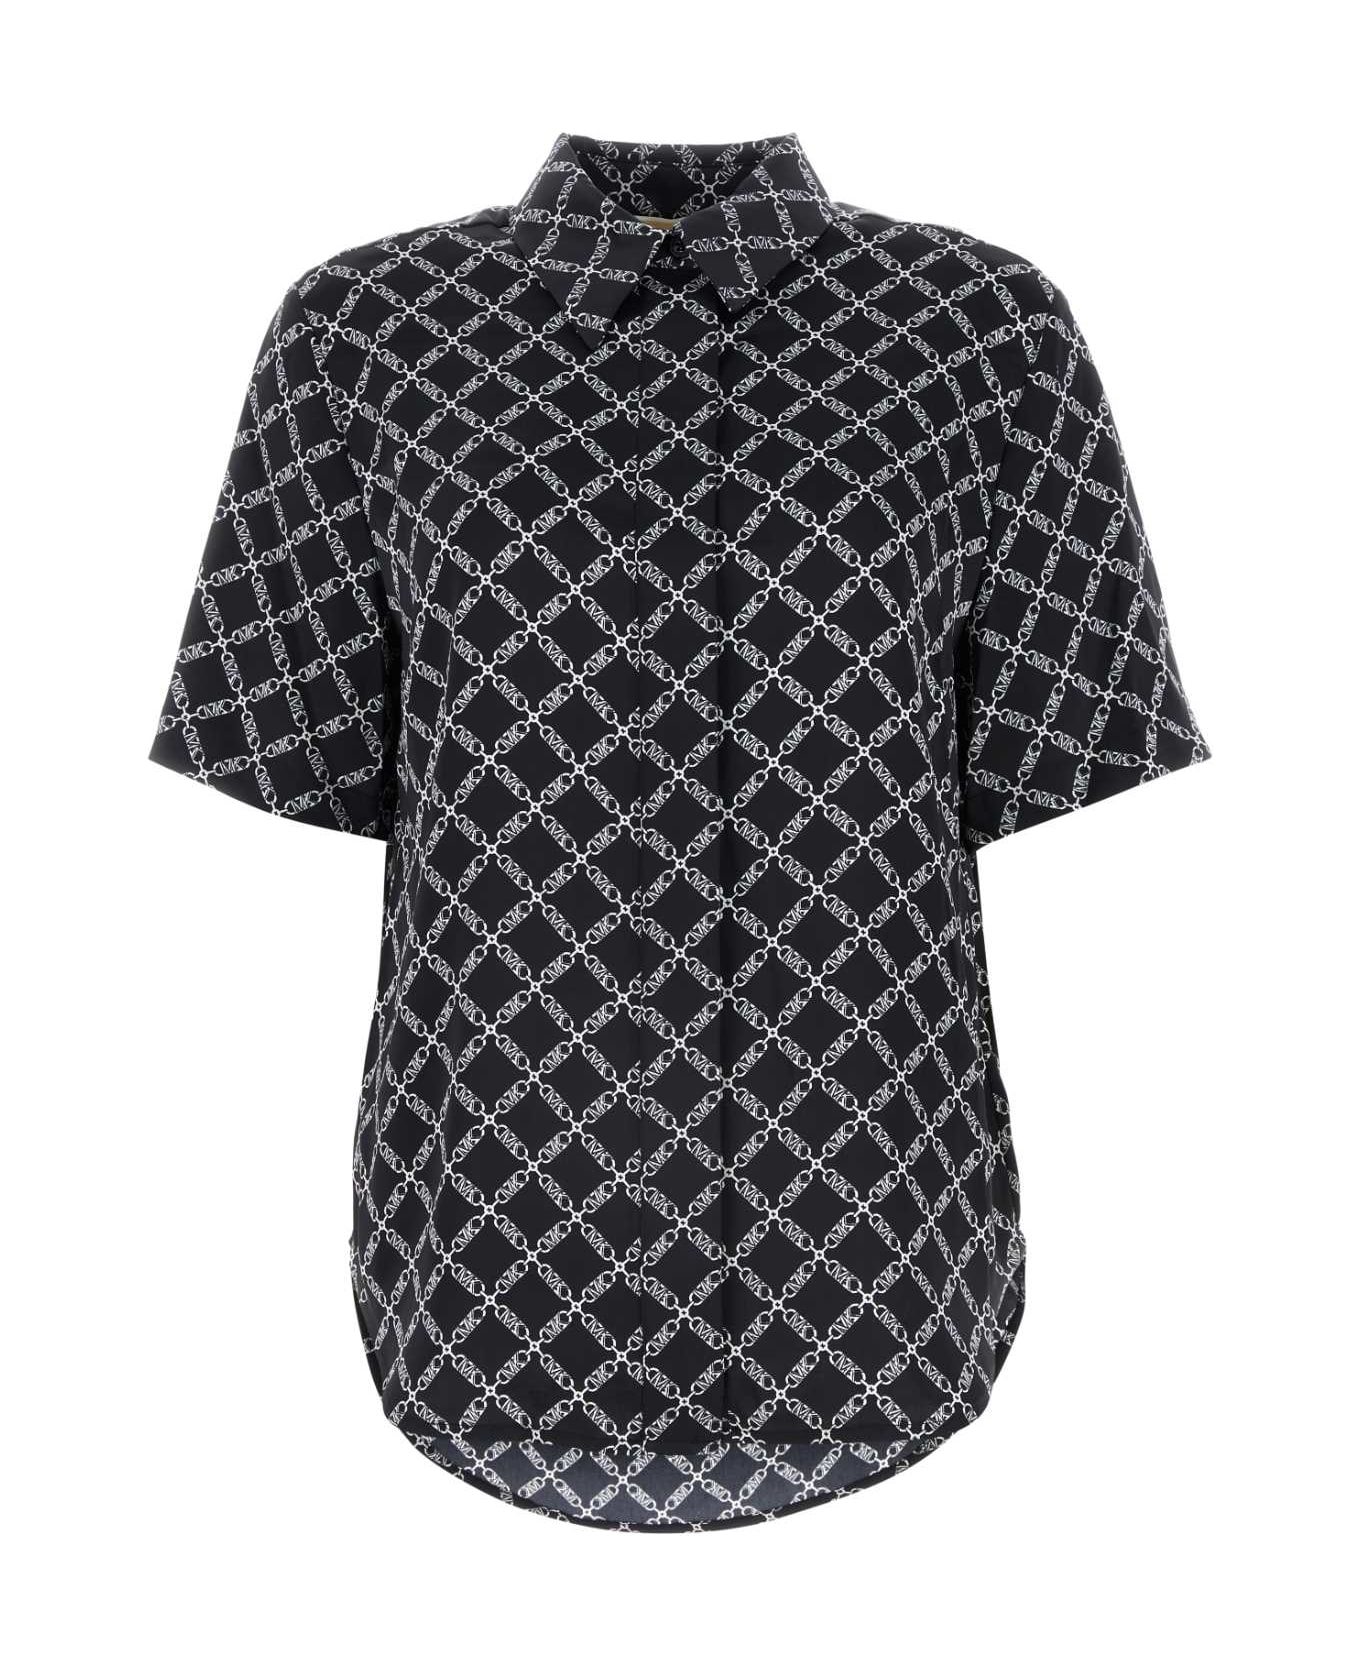 Michael Kors Printed Satin Shirt - BLACKWHITE